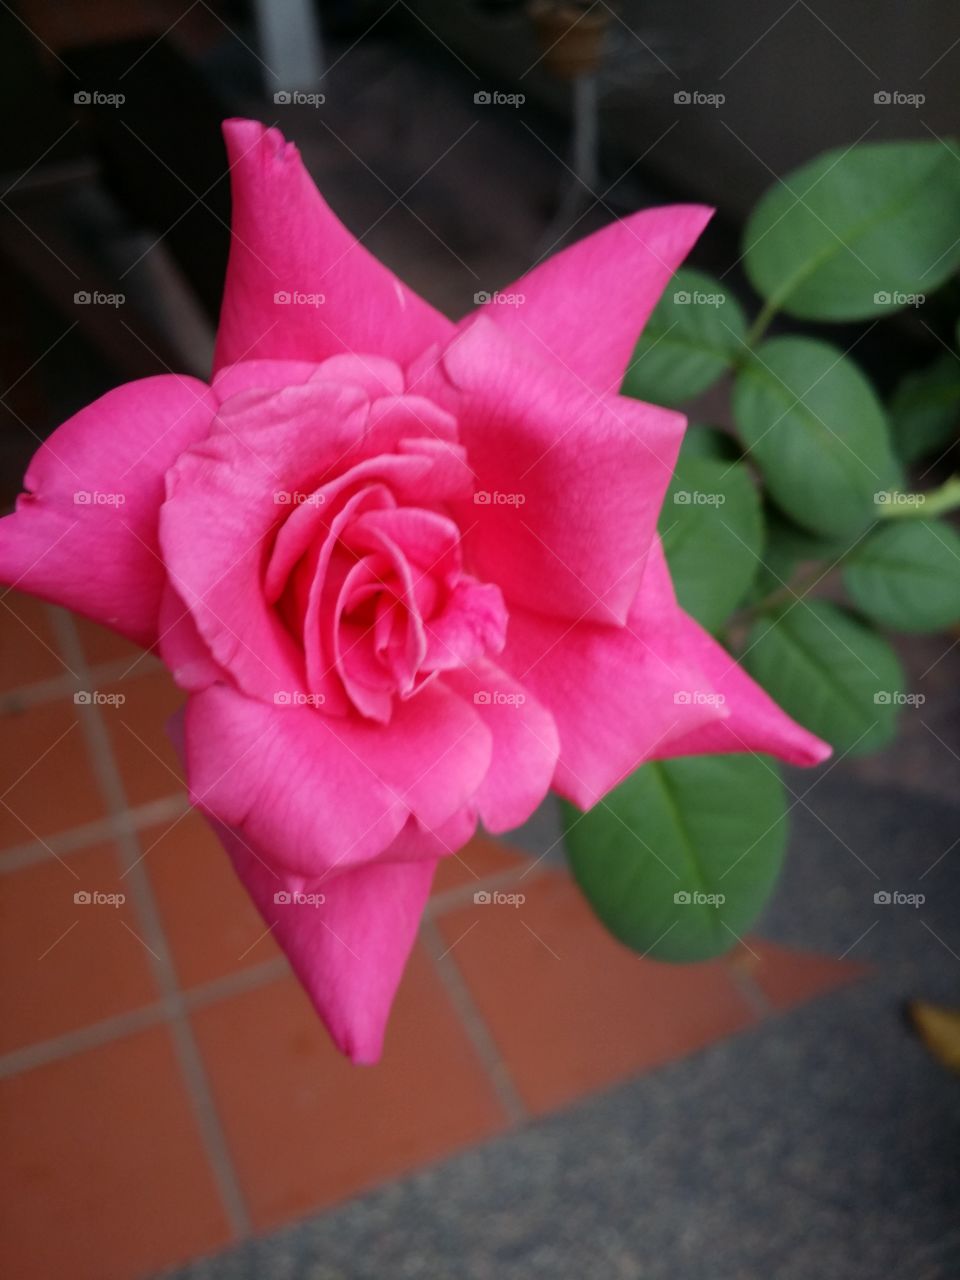 English purple rose. a beautiful rose is a beautiful rose. she is sweet.